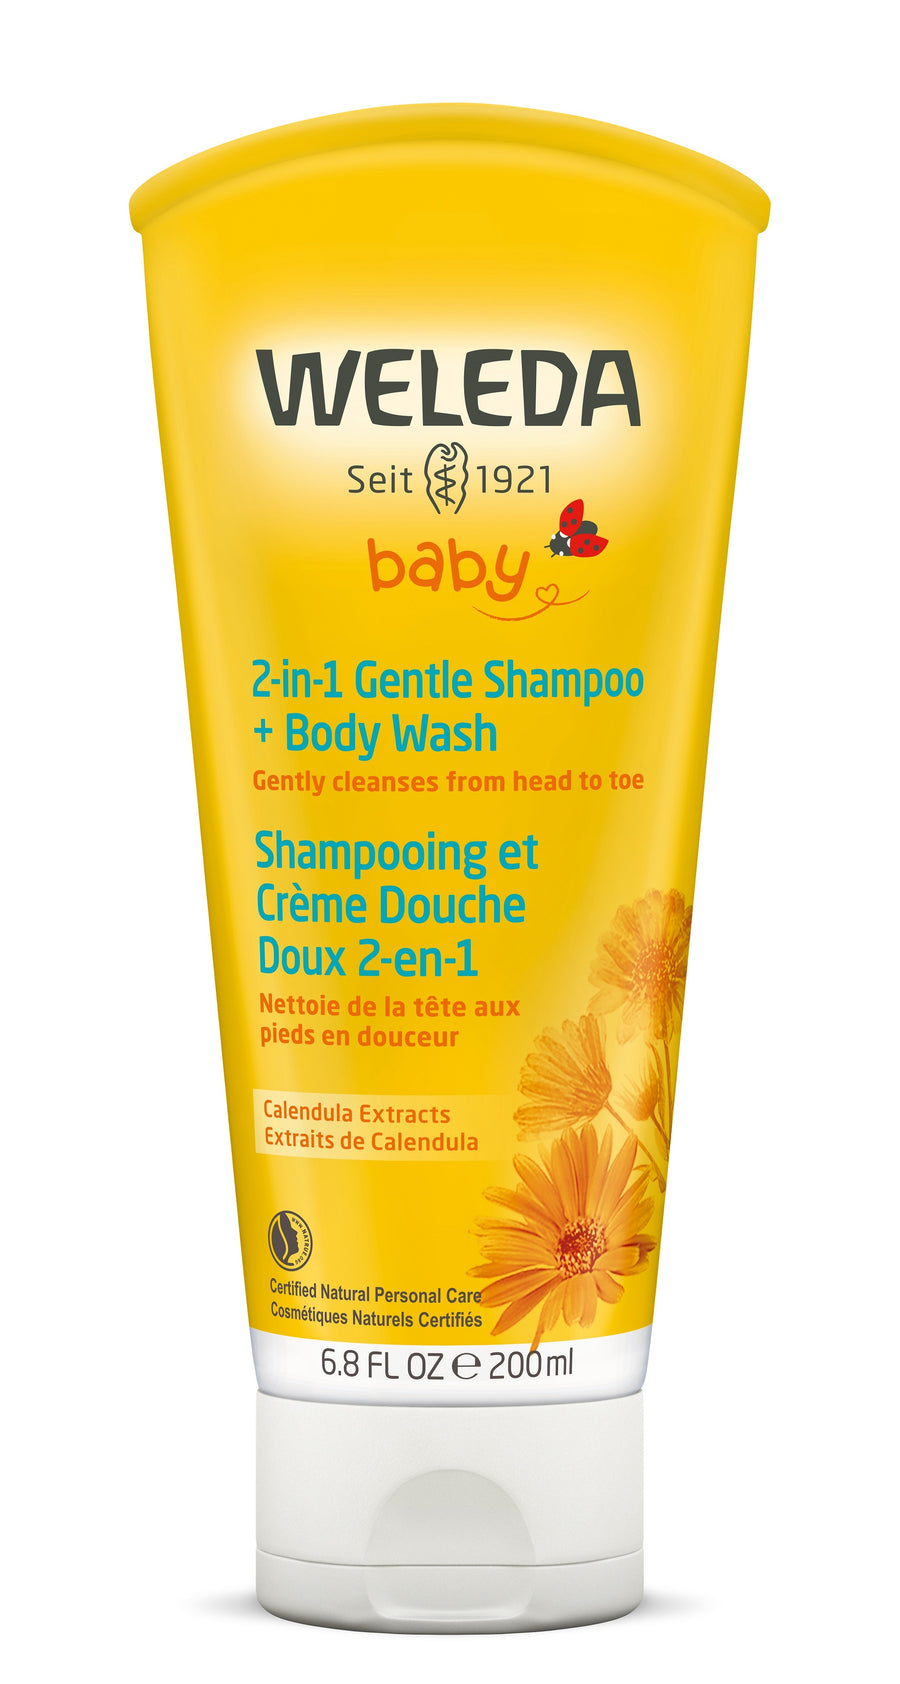 Weleda 2-in-1 Gentle Shampoo + Body Wash